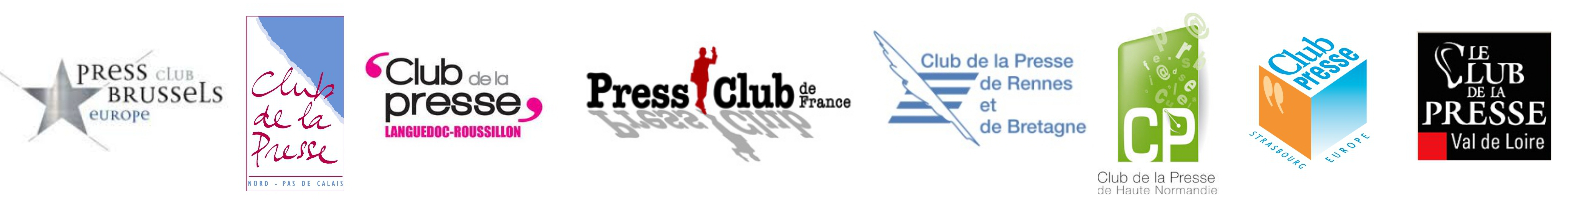 logos-clubs